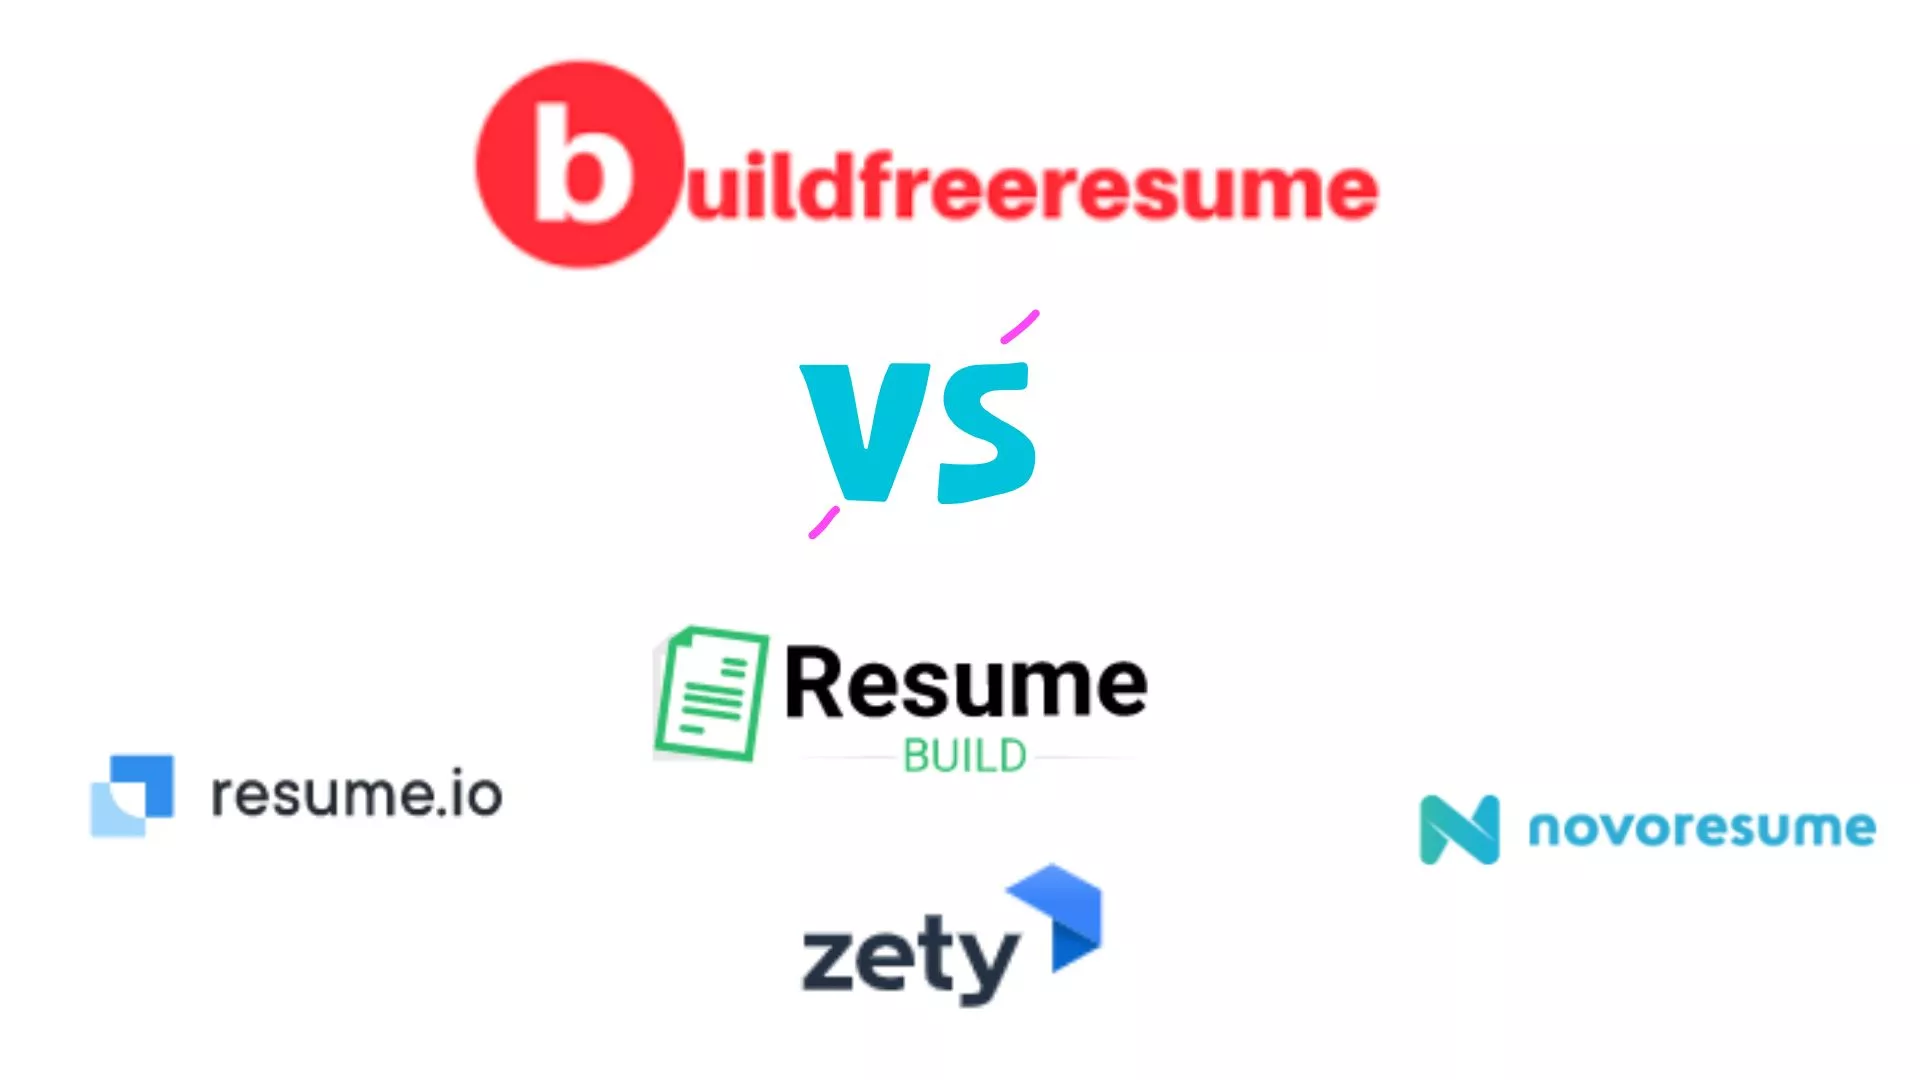 buildfreeresume vs resume.io resumebuild zety novoresume